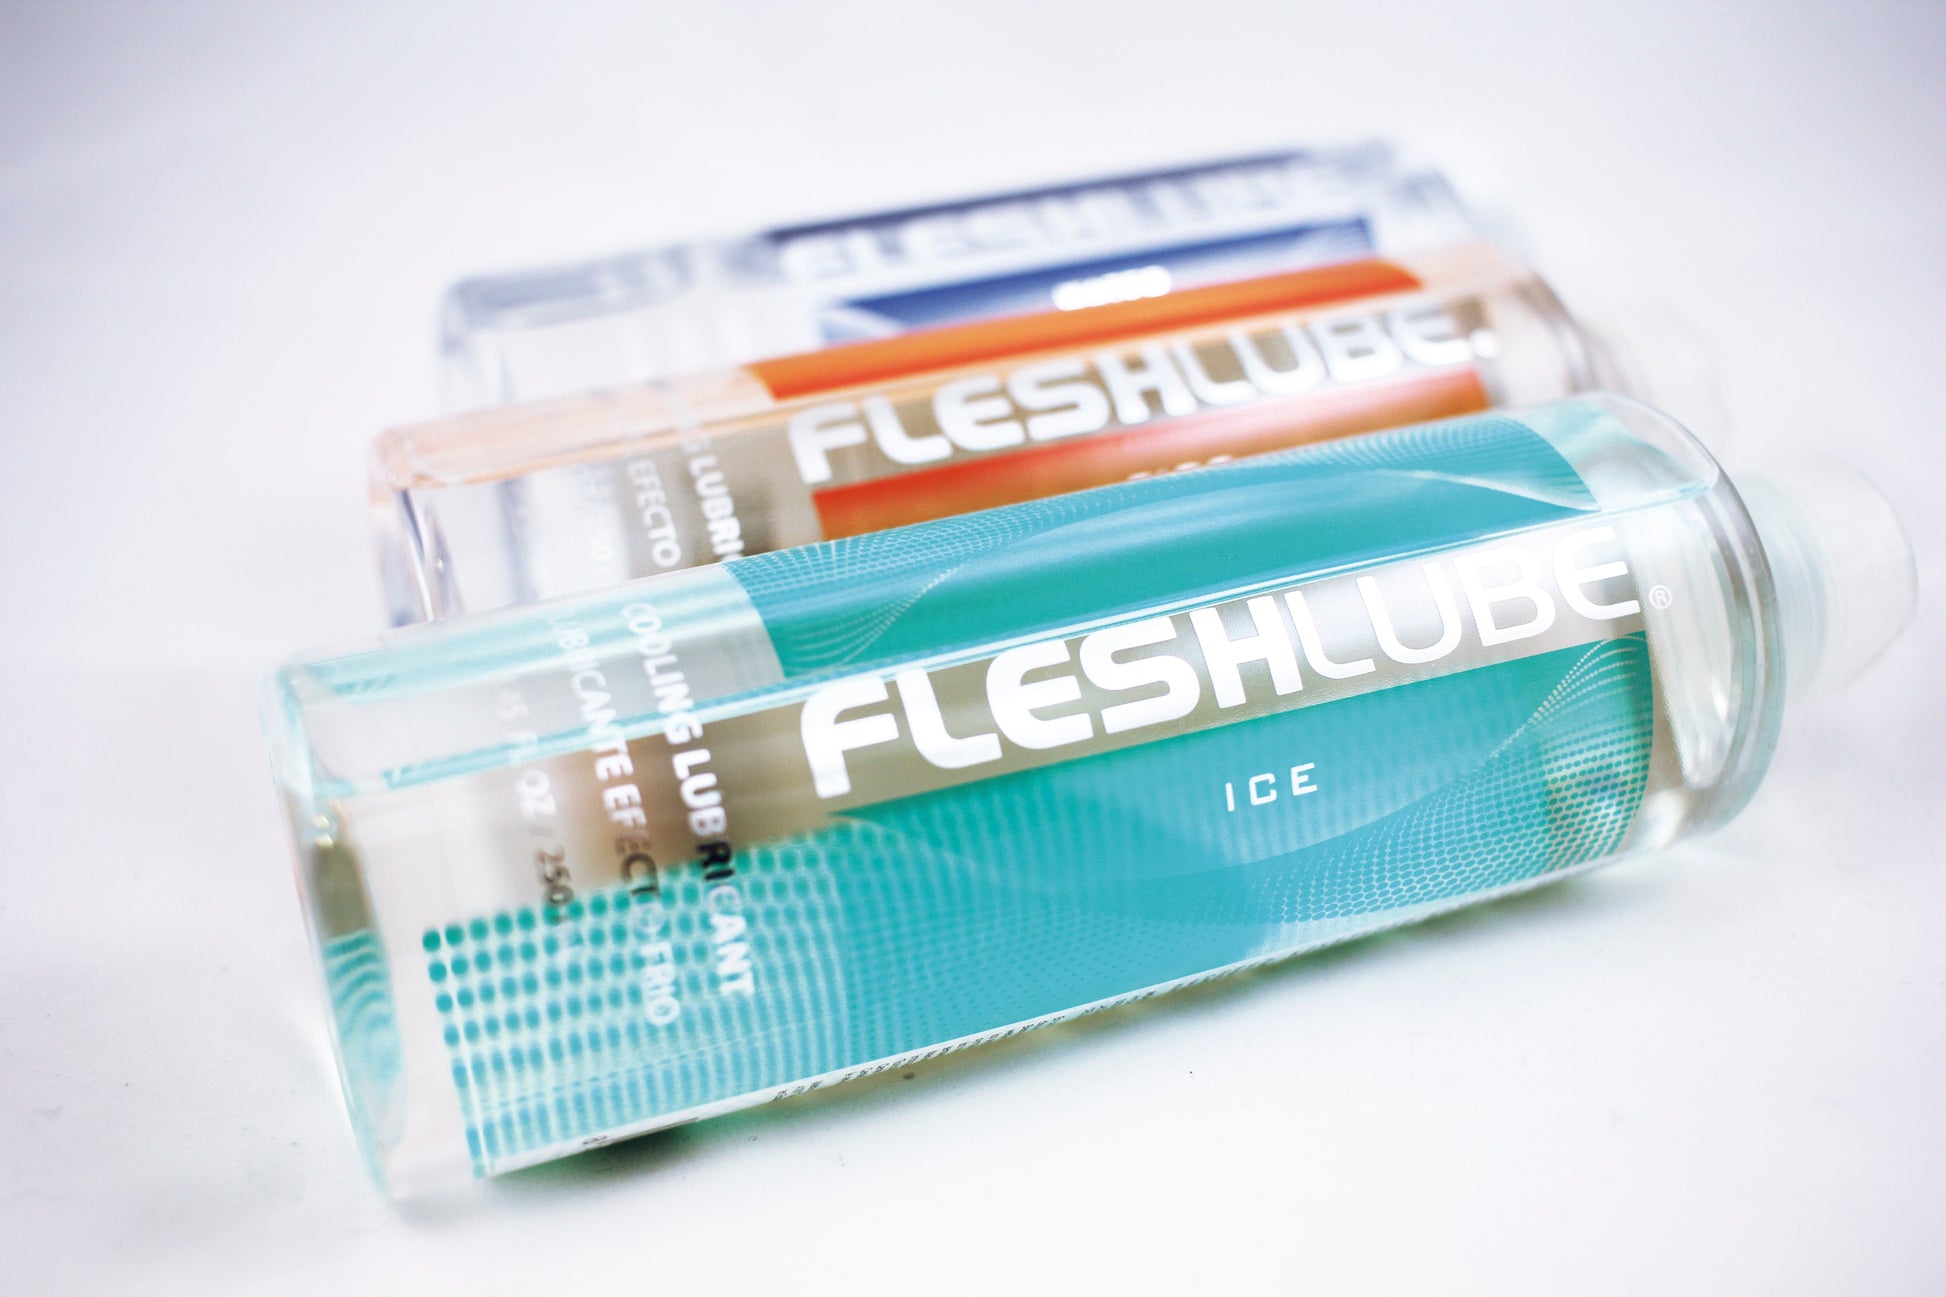 Fleshlube Ice 8 Oz  - Club X